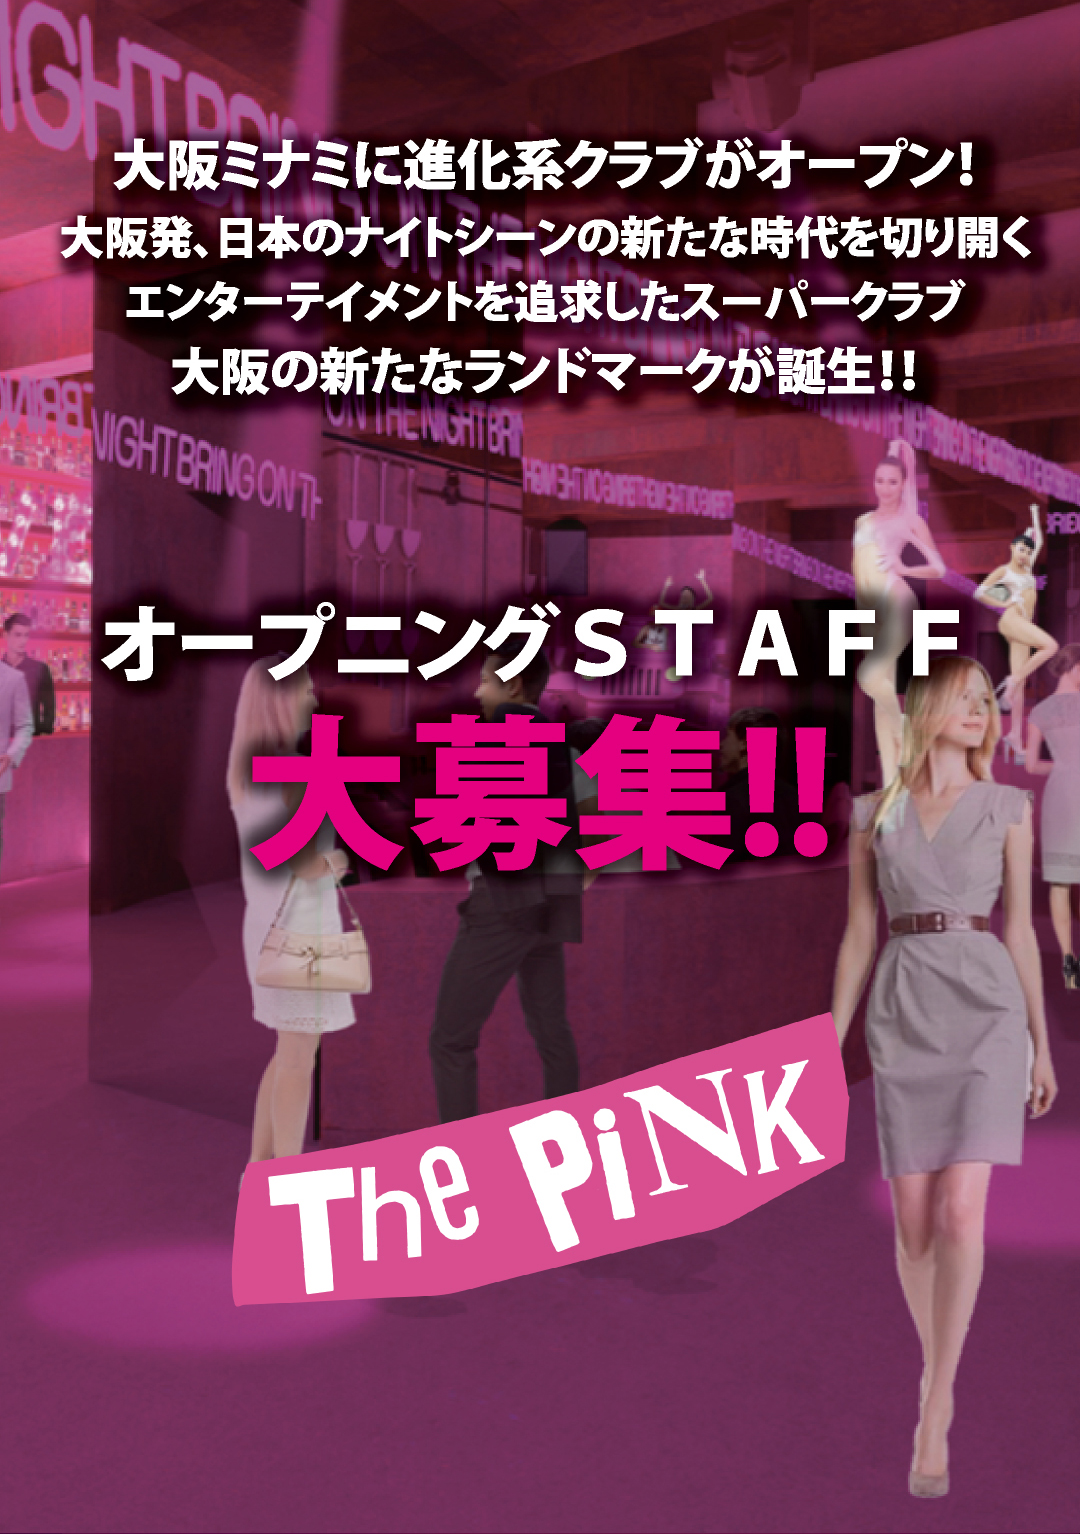 Recruit The Pink 大阪ミナミの進化系クラブ